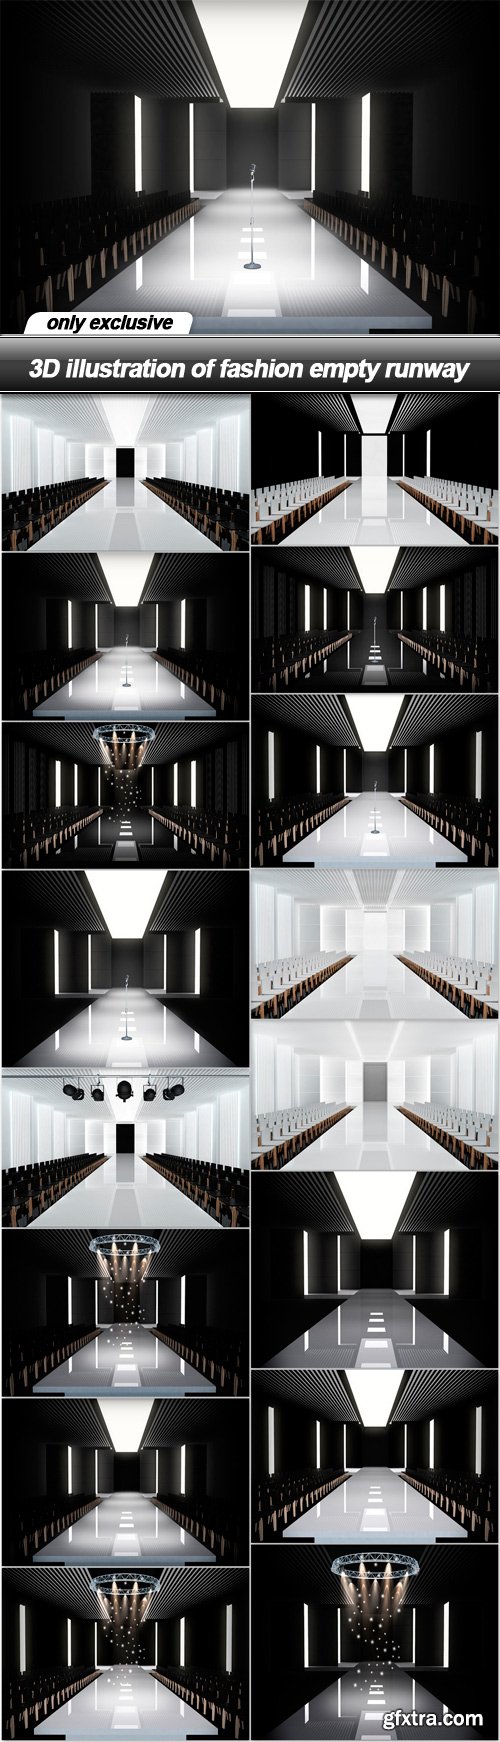 3D illustration of fashion empty runway - 16 UHQ JPEG